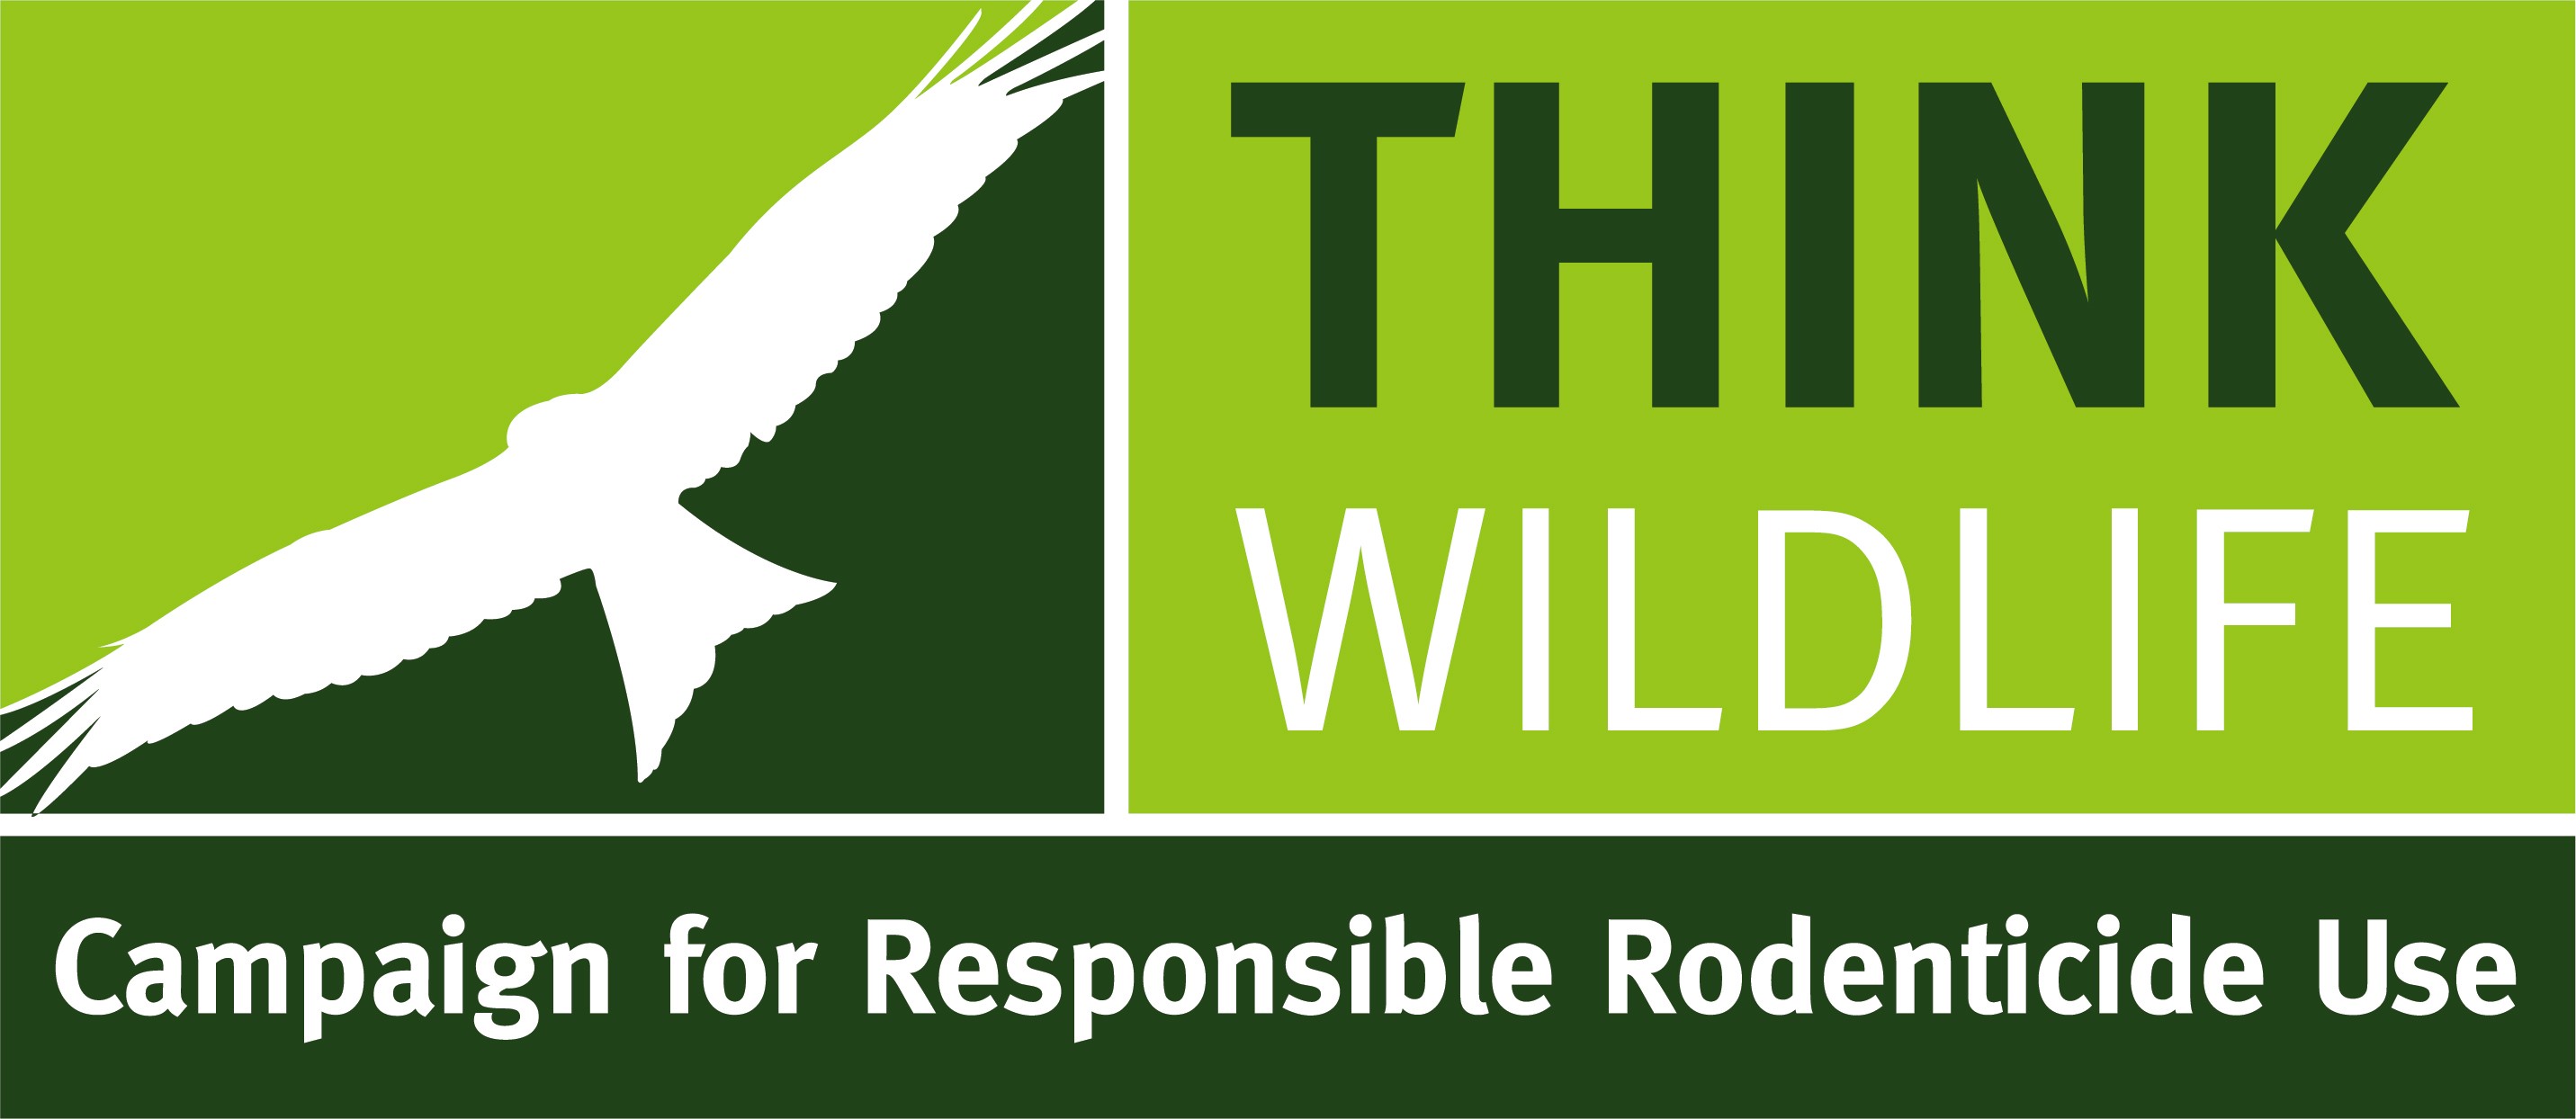 footer image of wildlife logo